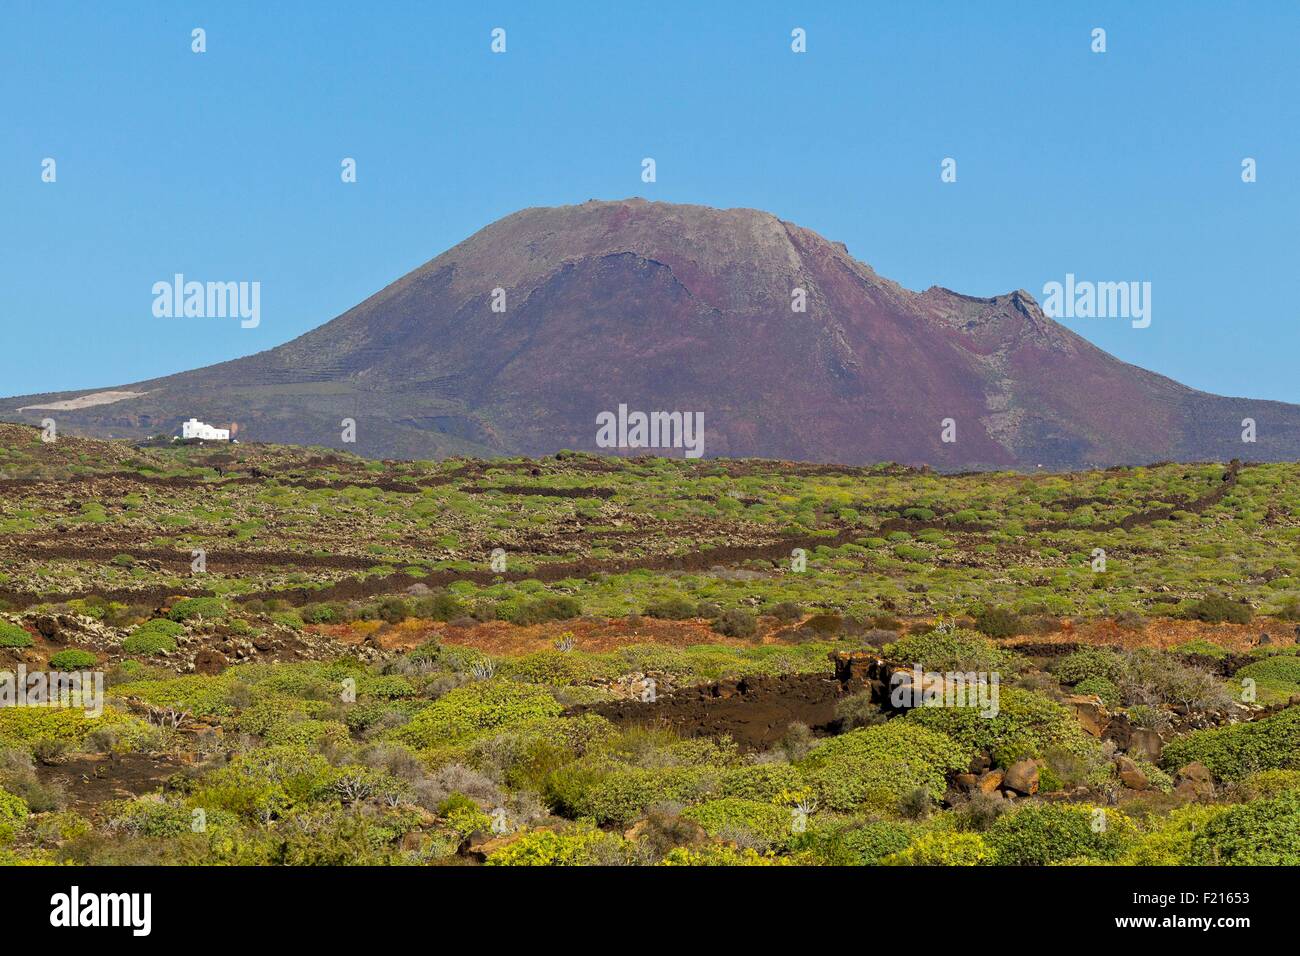 Spain, Canaries Islands, Lanzarote island, the Monte Corona Stock Photo